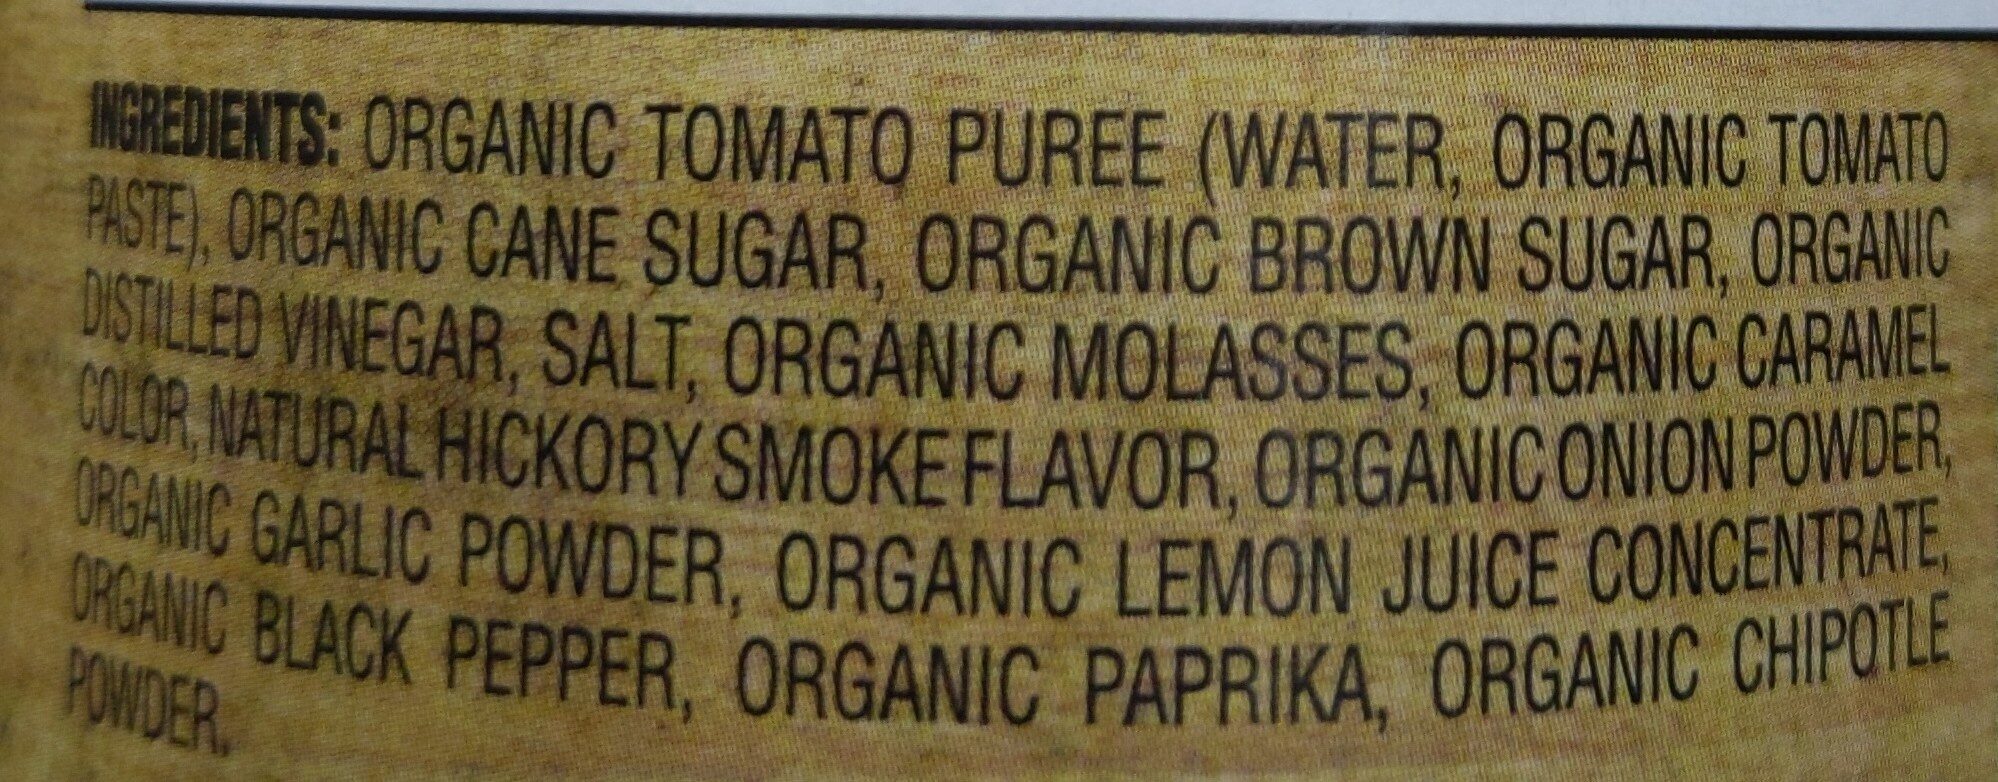 Organic Kansas City Style BBQ Sauce - Ingredients